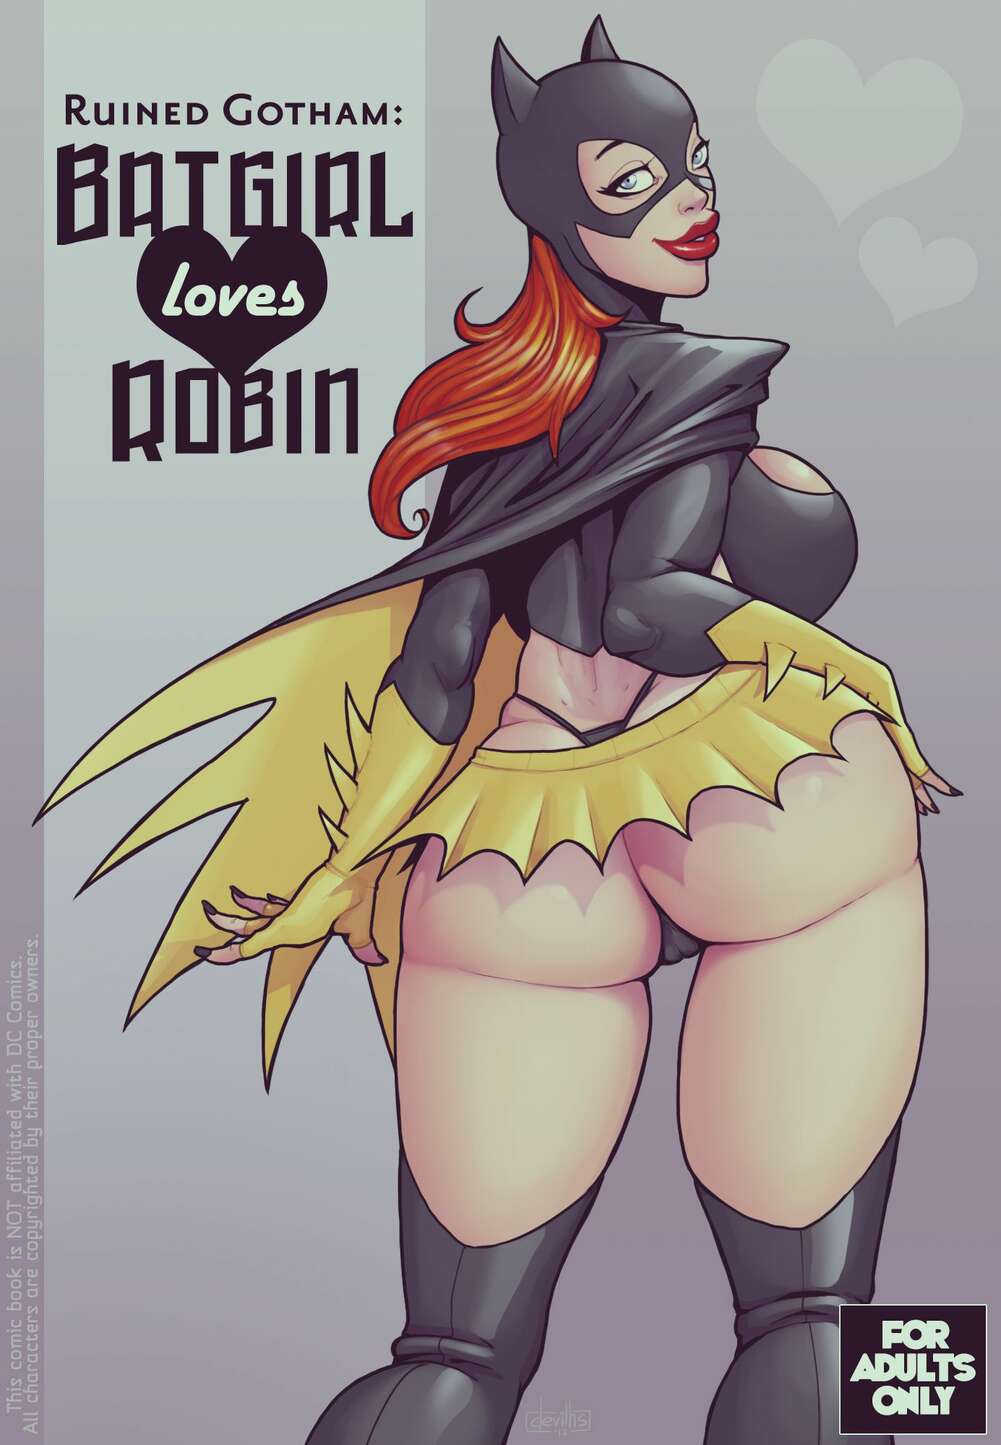 Batman And Robin Sex - â„¹ï¸ Porn comics Ruined Gotham. Batgirl Loves Robin. Batman. Erotic comic  needed to go â„¹ï¸ | Porn comics hentai adult only | comicsporn.site